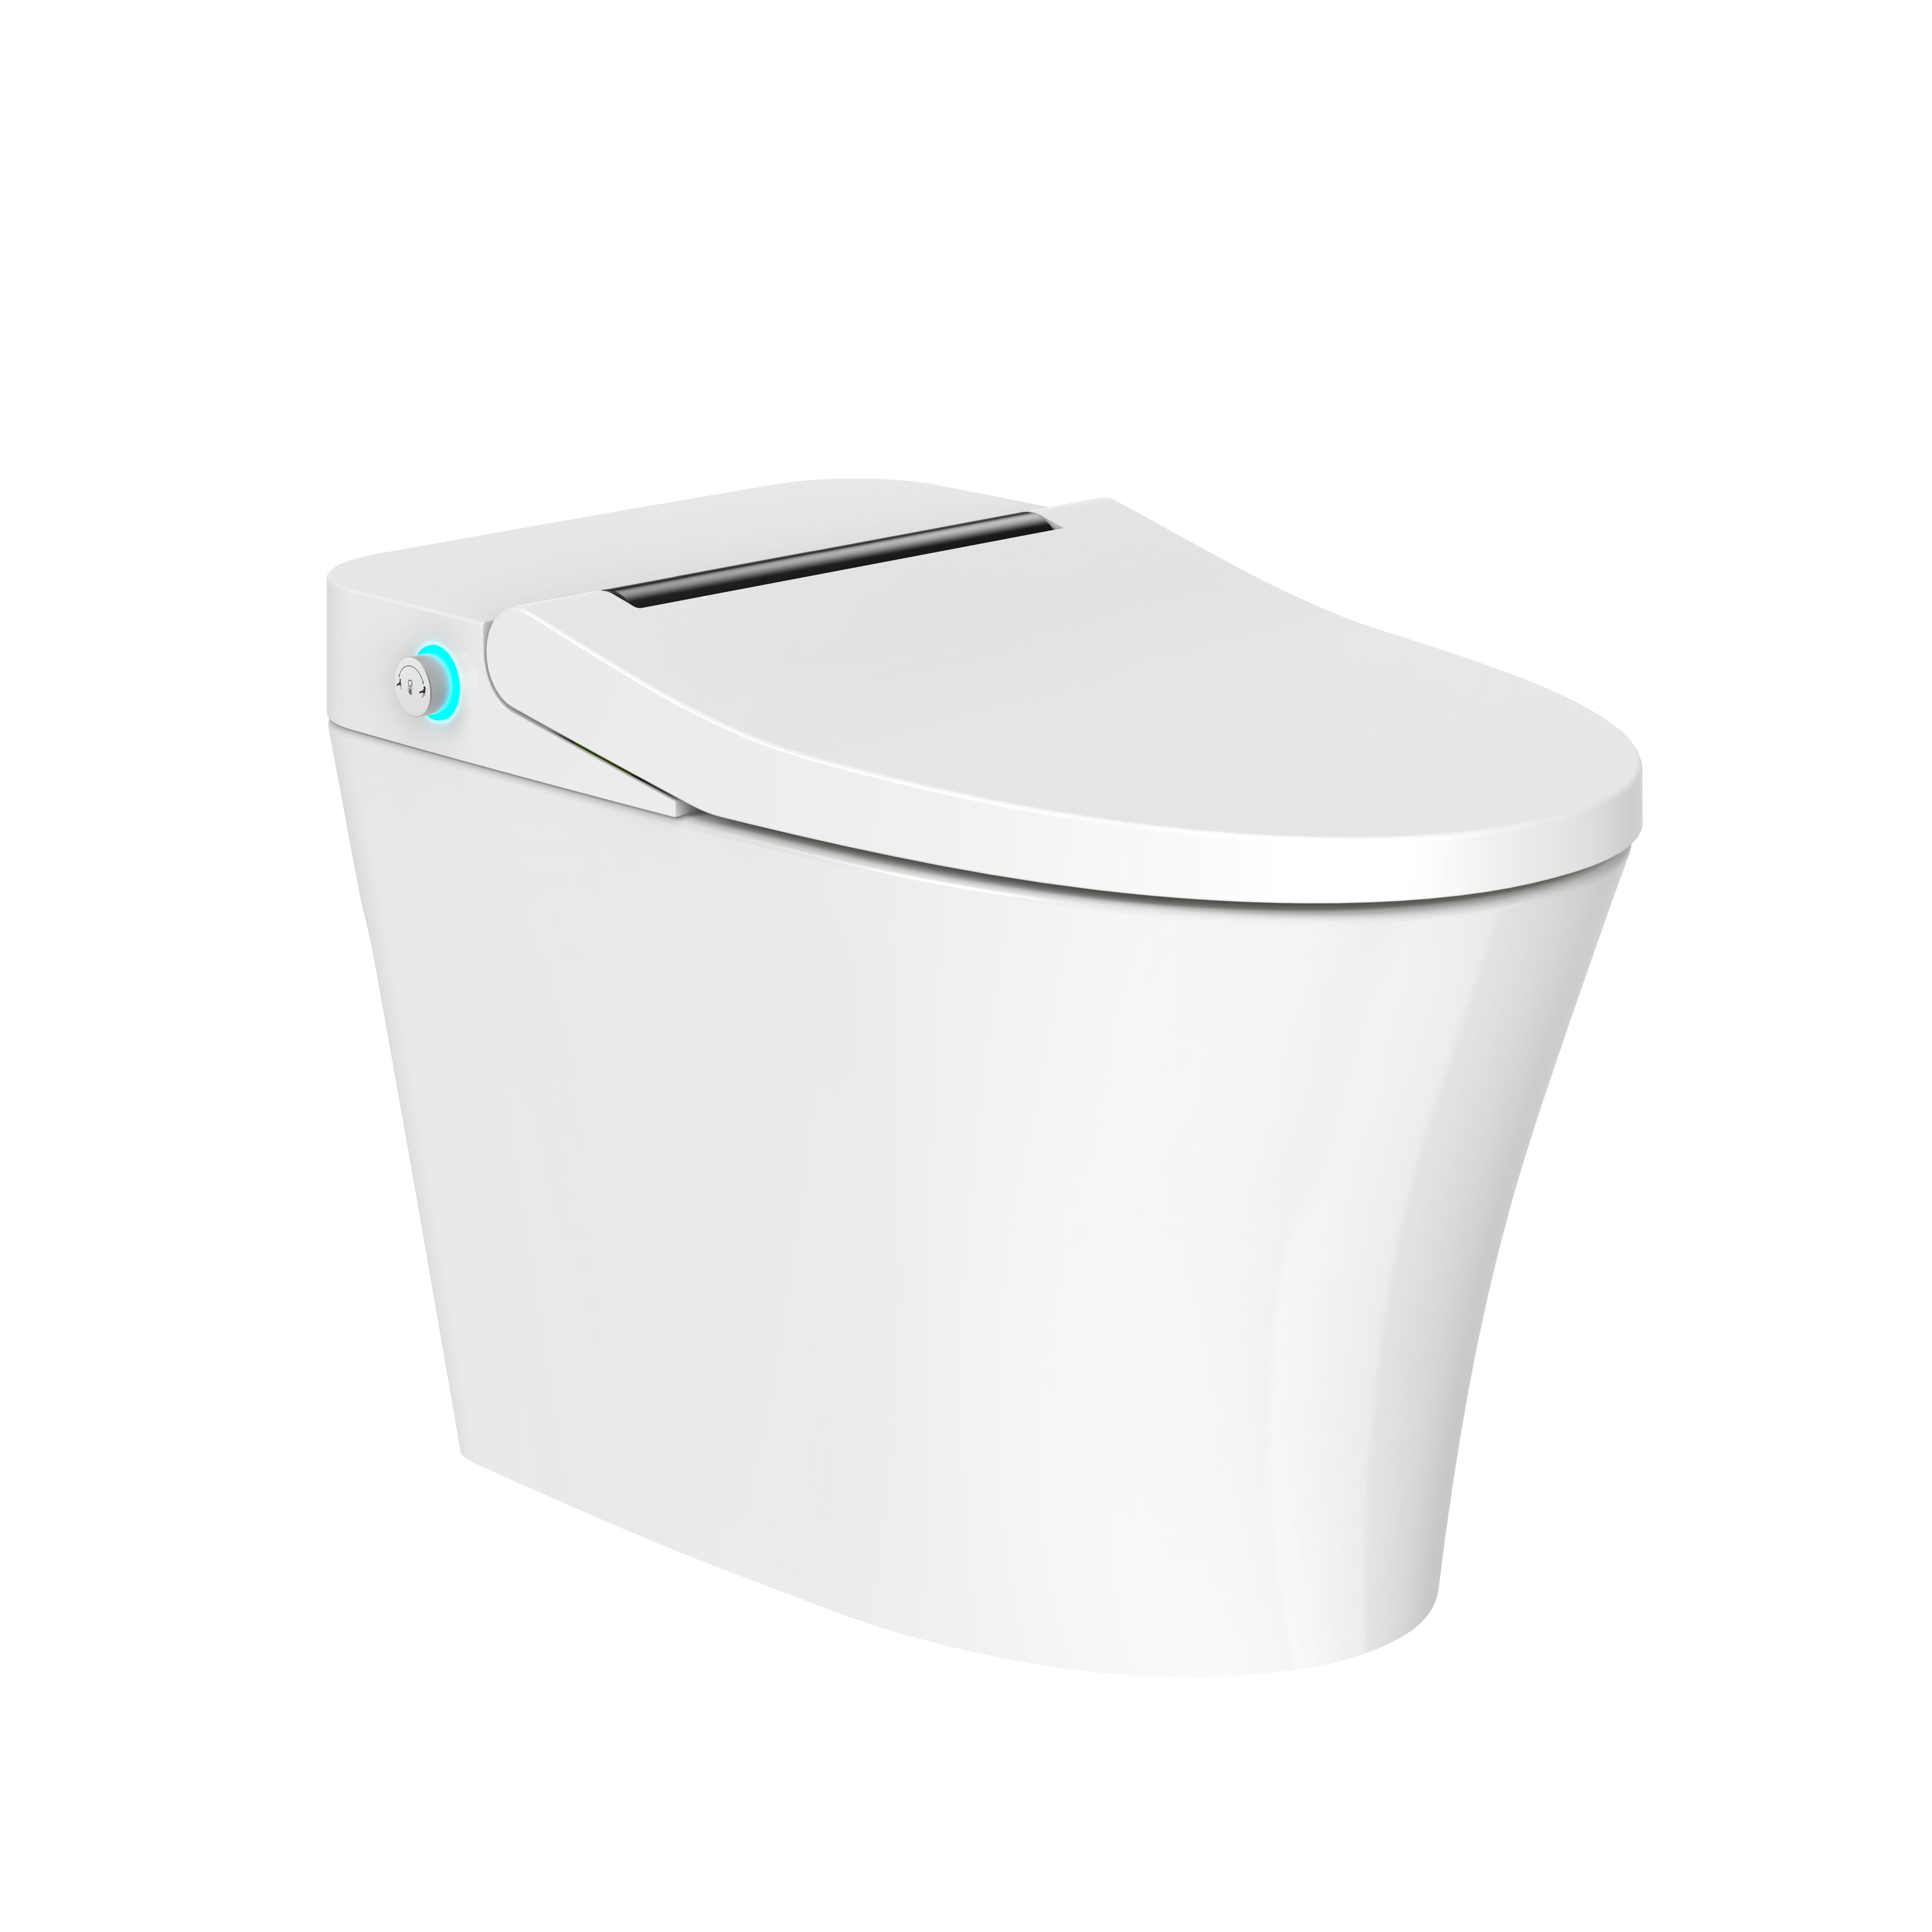 Elongated Smart Toilet Bidet in White with UV-A Sterilization, Auto Flush, Heated Seat